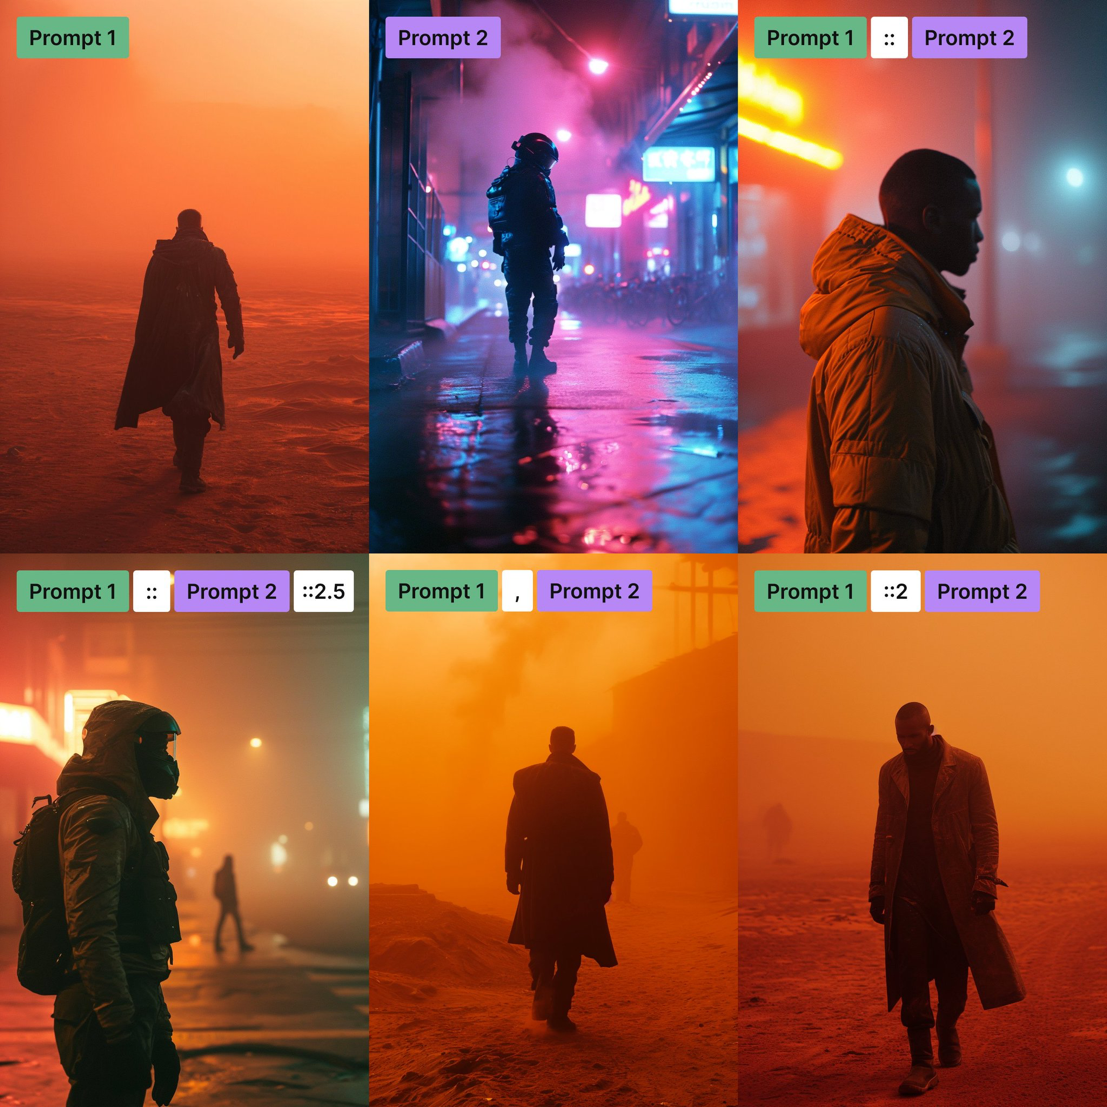 Prompt 1:
movie still, close-up, a man in a futuristic coat in an orange sand patch, minimalist, hazy, foggy, red...